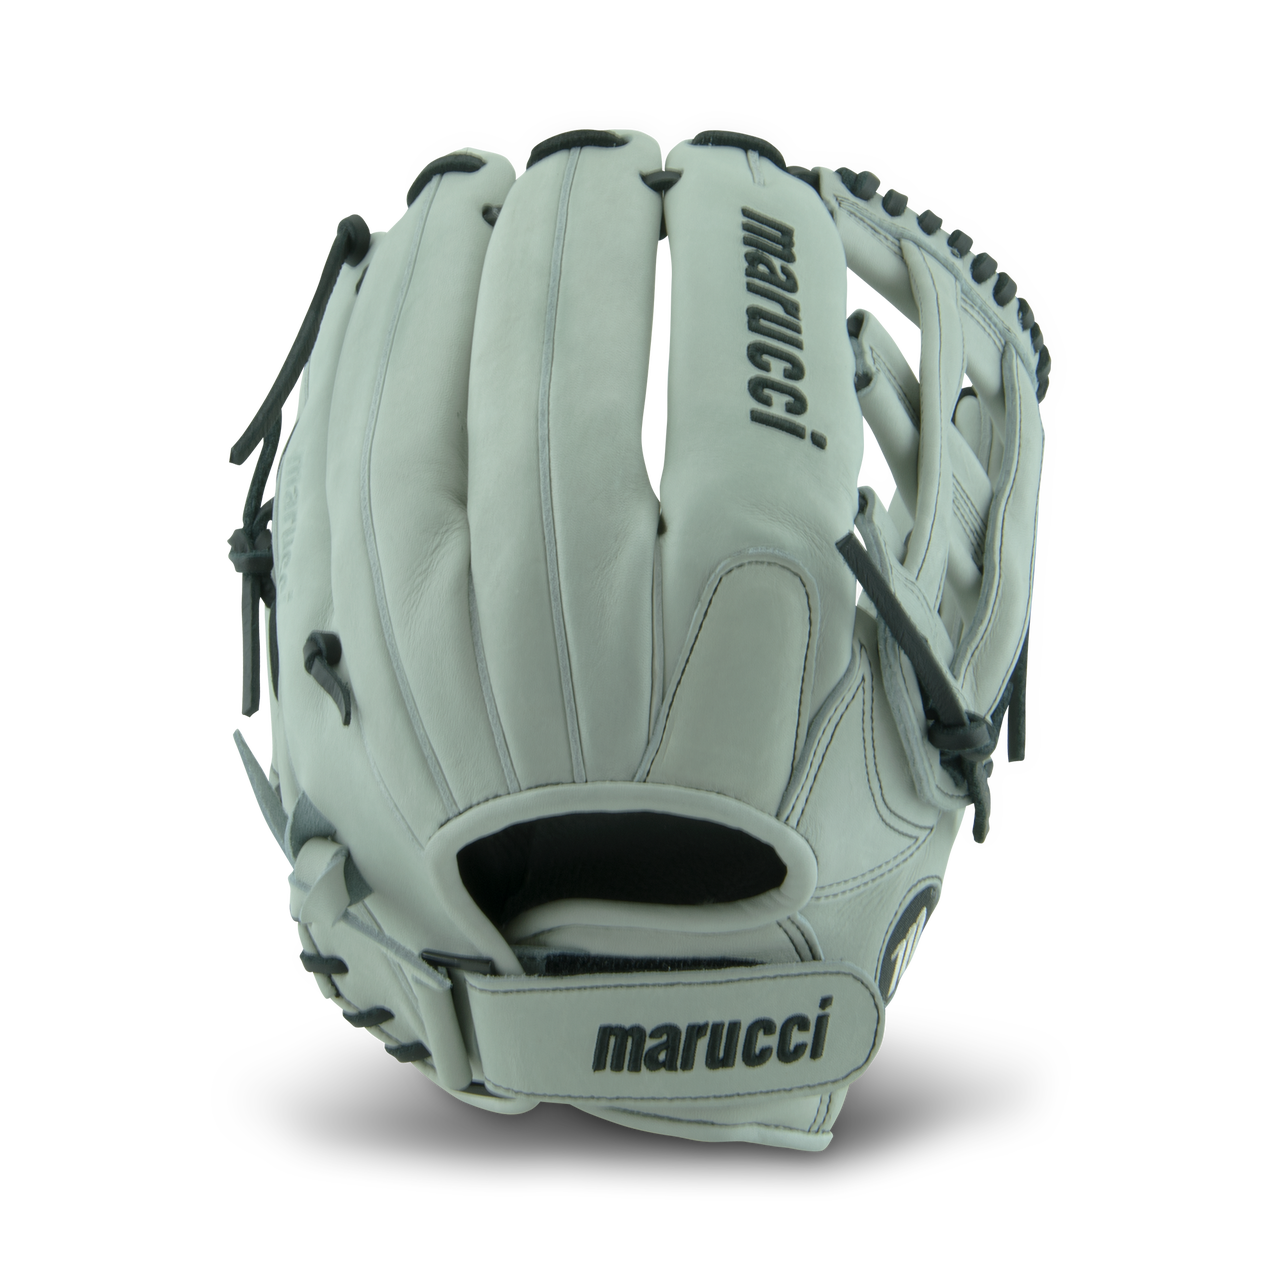 marucci-fastpitch-series-mfgsb1250hv-softball-glove